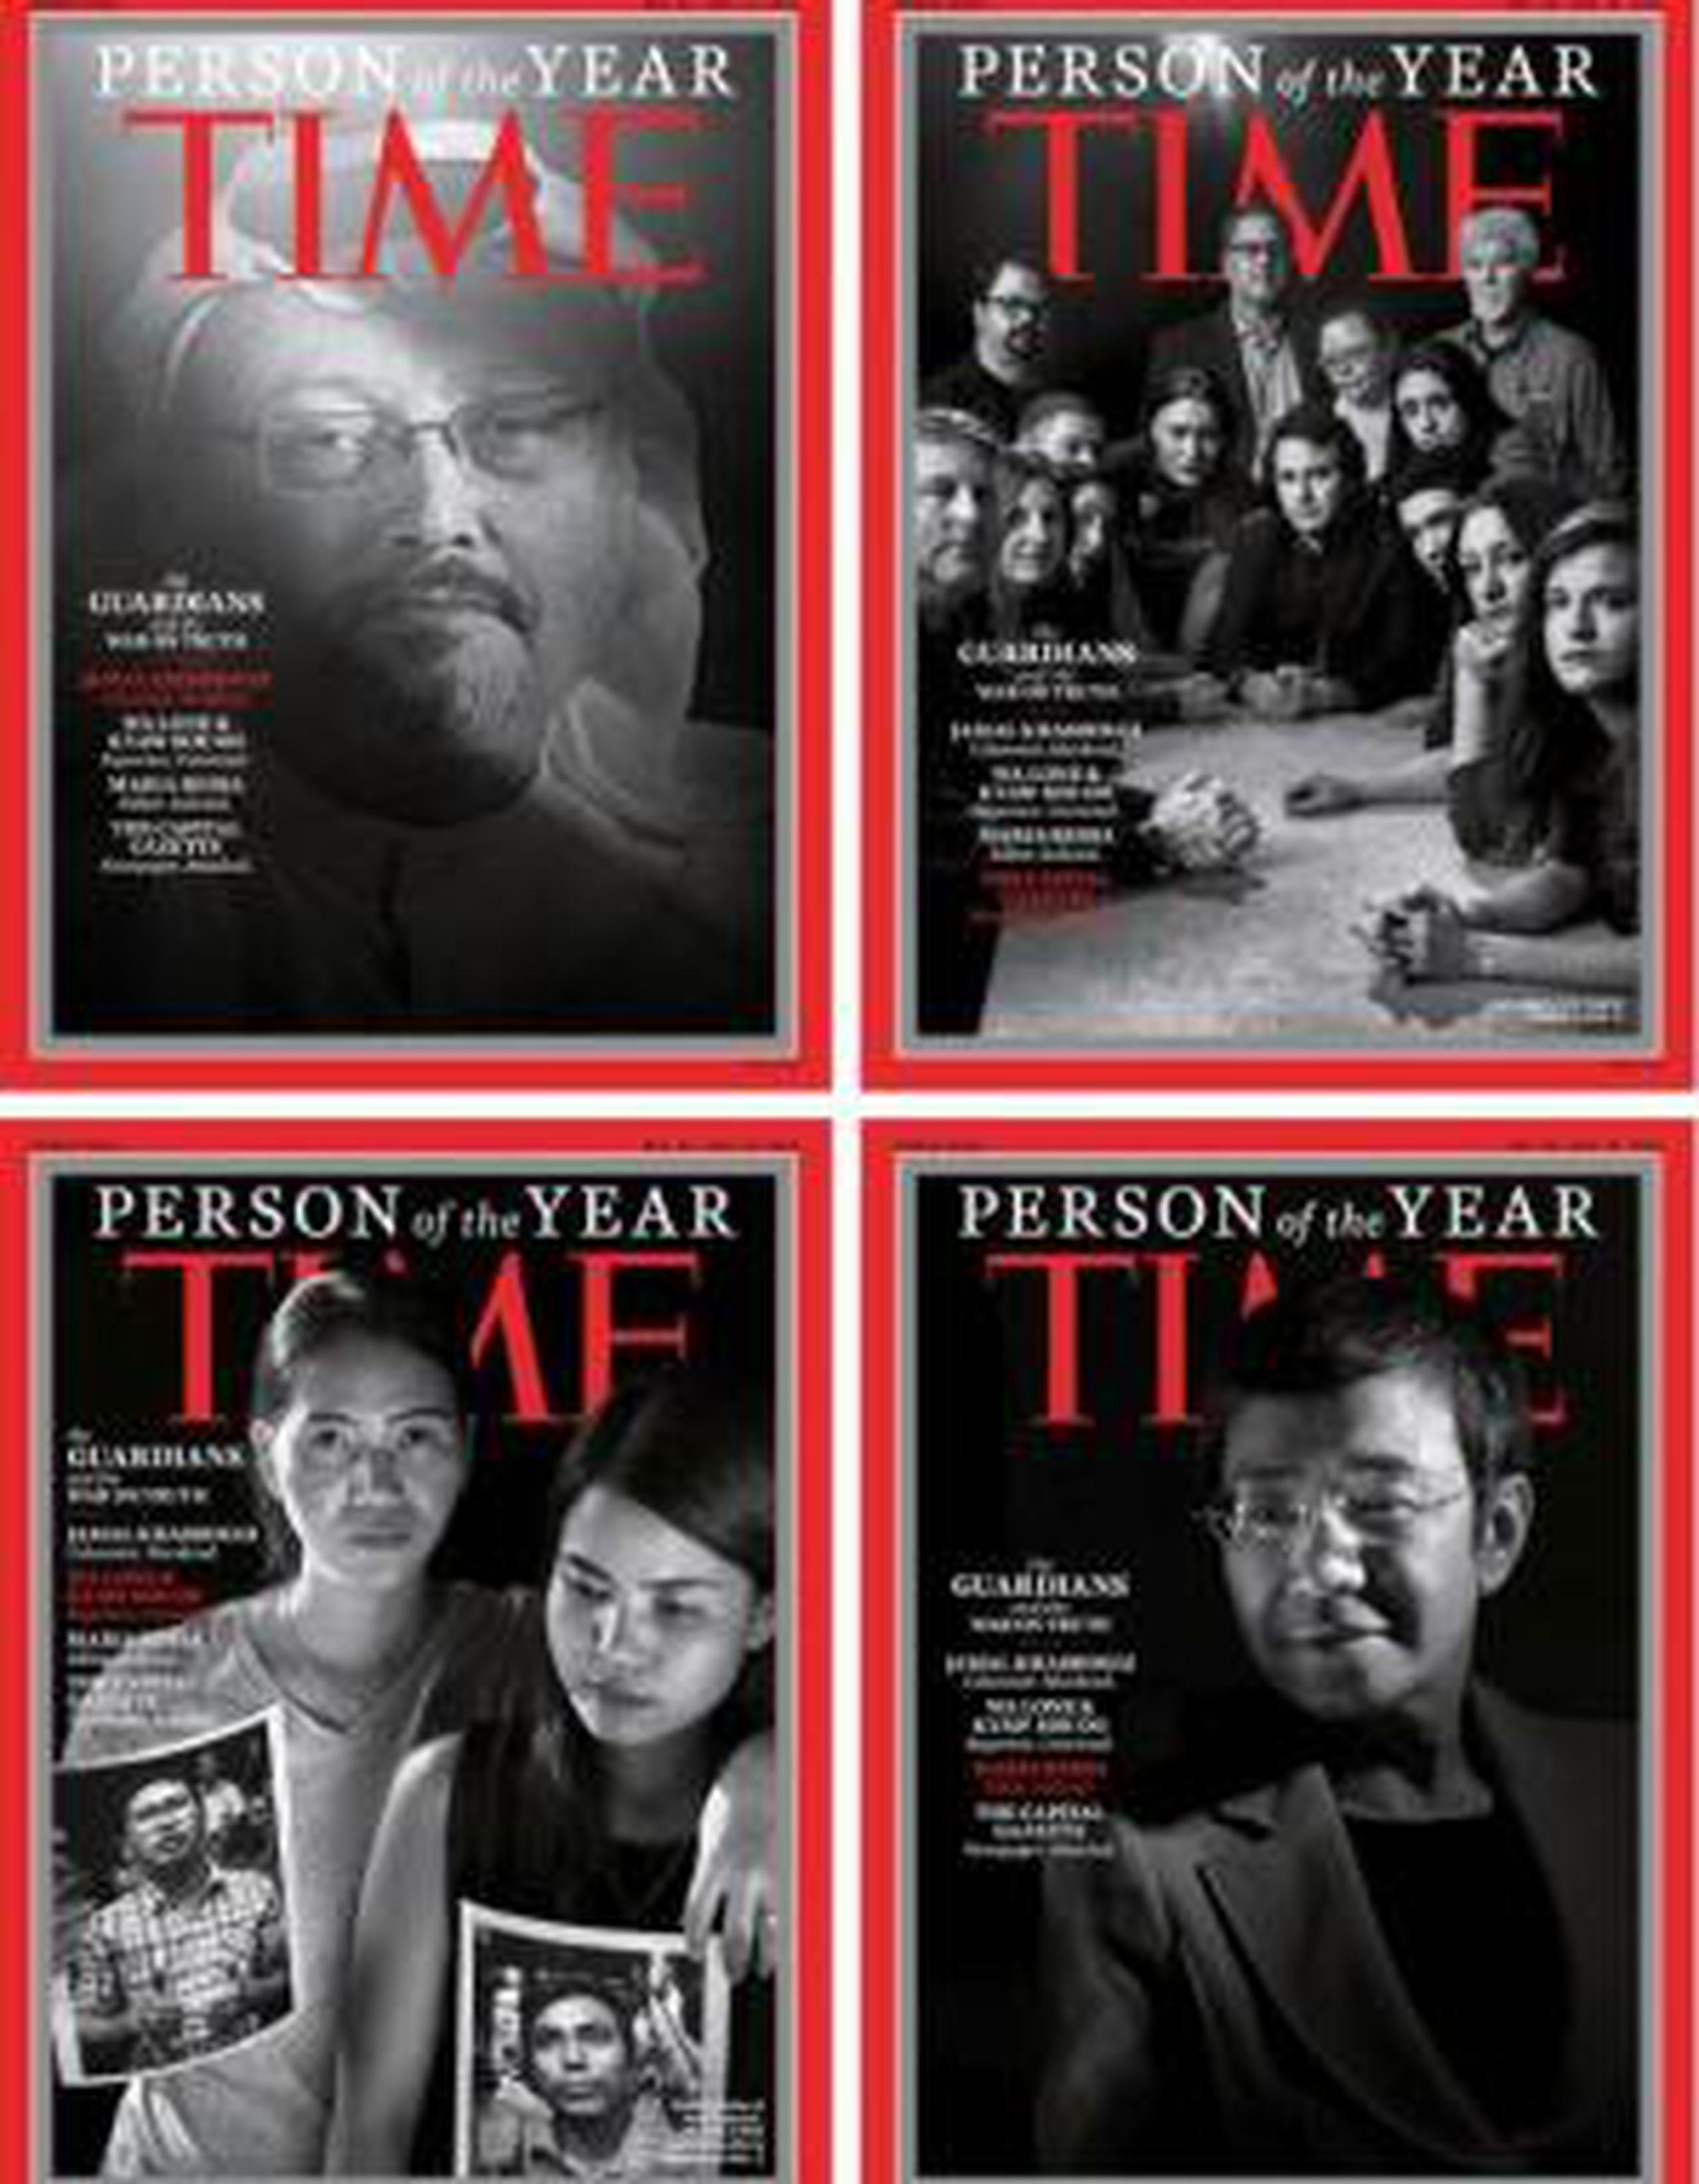 Portadas de la revista "Time" sobre la Persona del Año. (Twitter / @TIME)